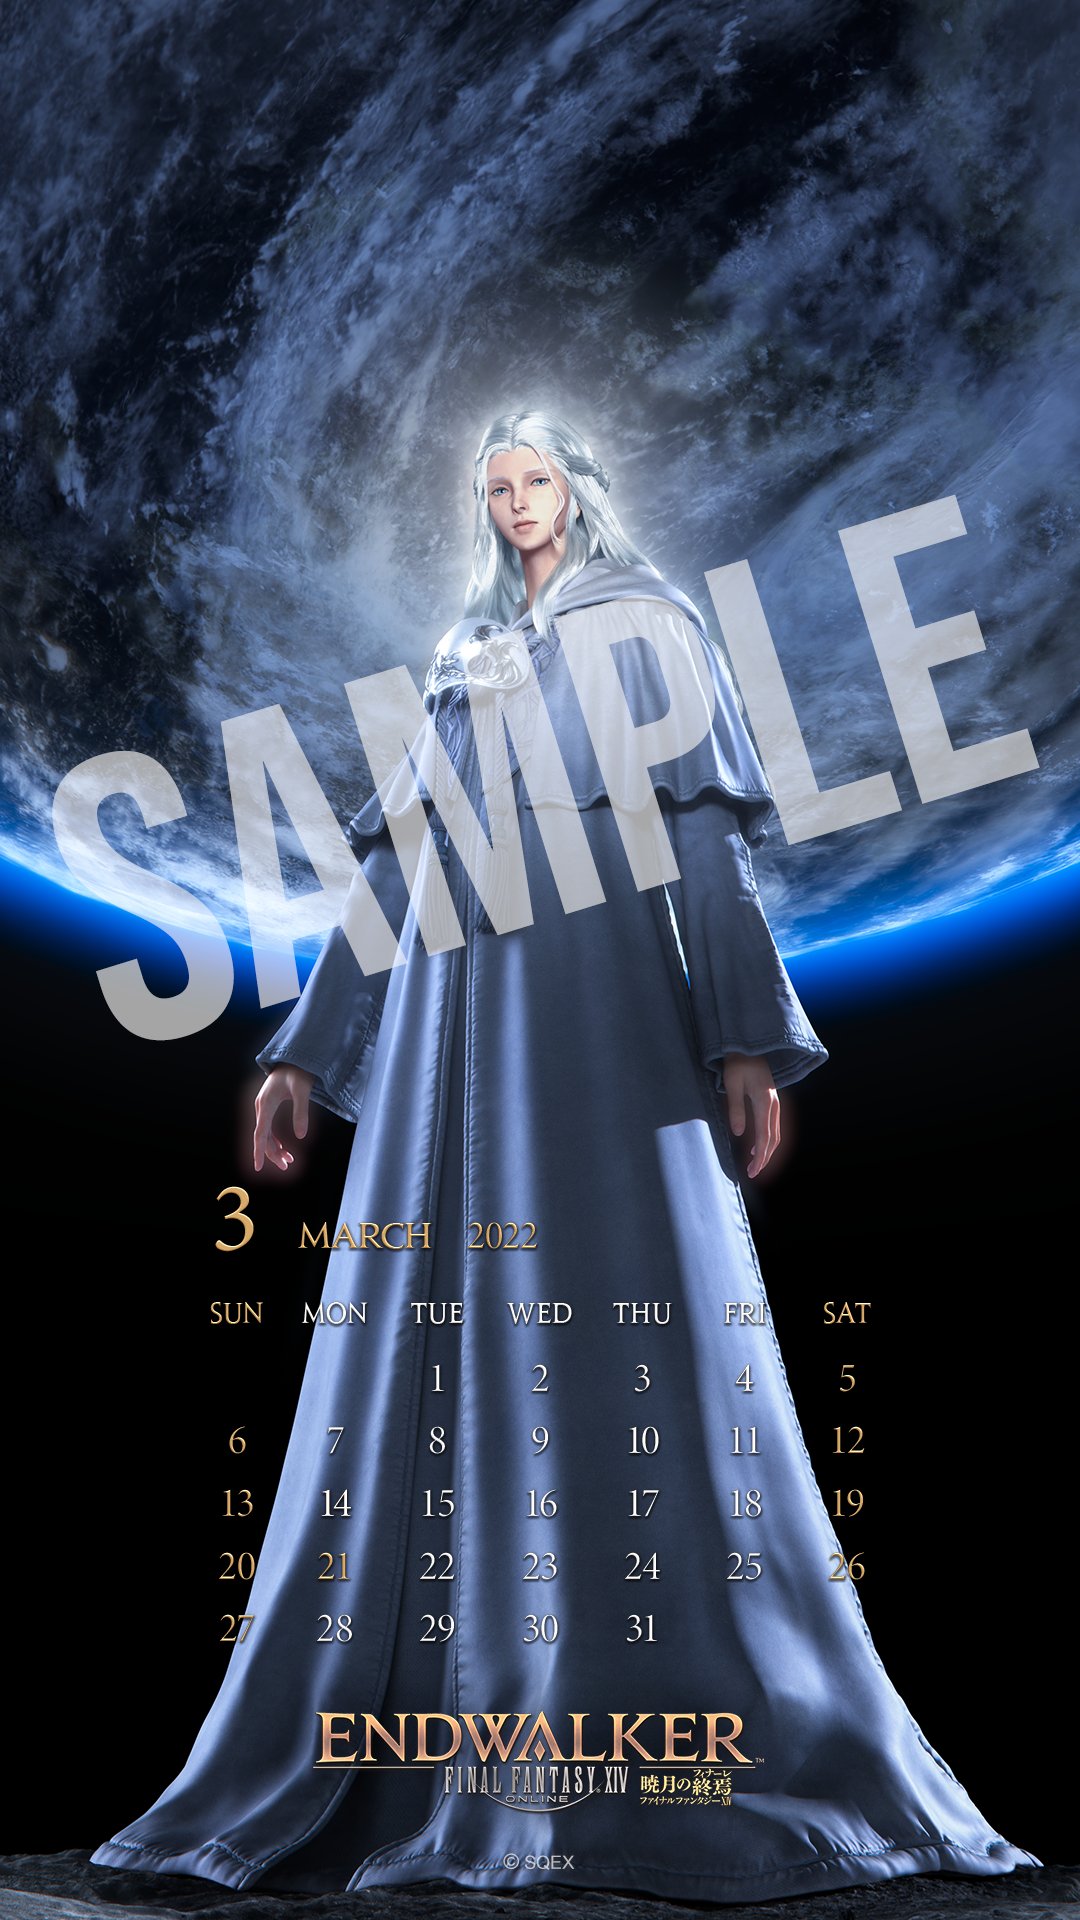 Final Fantasy Xiv Ff14 Ff14 Line公式アカウント Lineオリジナル スマホ壁紙 カレンダー更新 3月は初公開cgアート ヴェーネス 壁紙 カレンダーはline公式アカウントを友だち追加 Sqexアカウントとid連携すると毎月もらえます トーク画面のメニュー